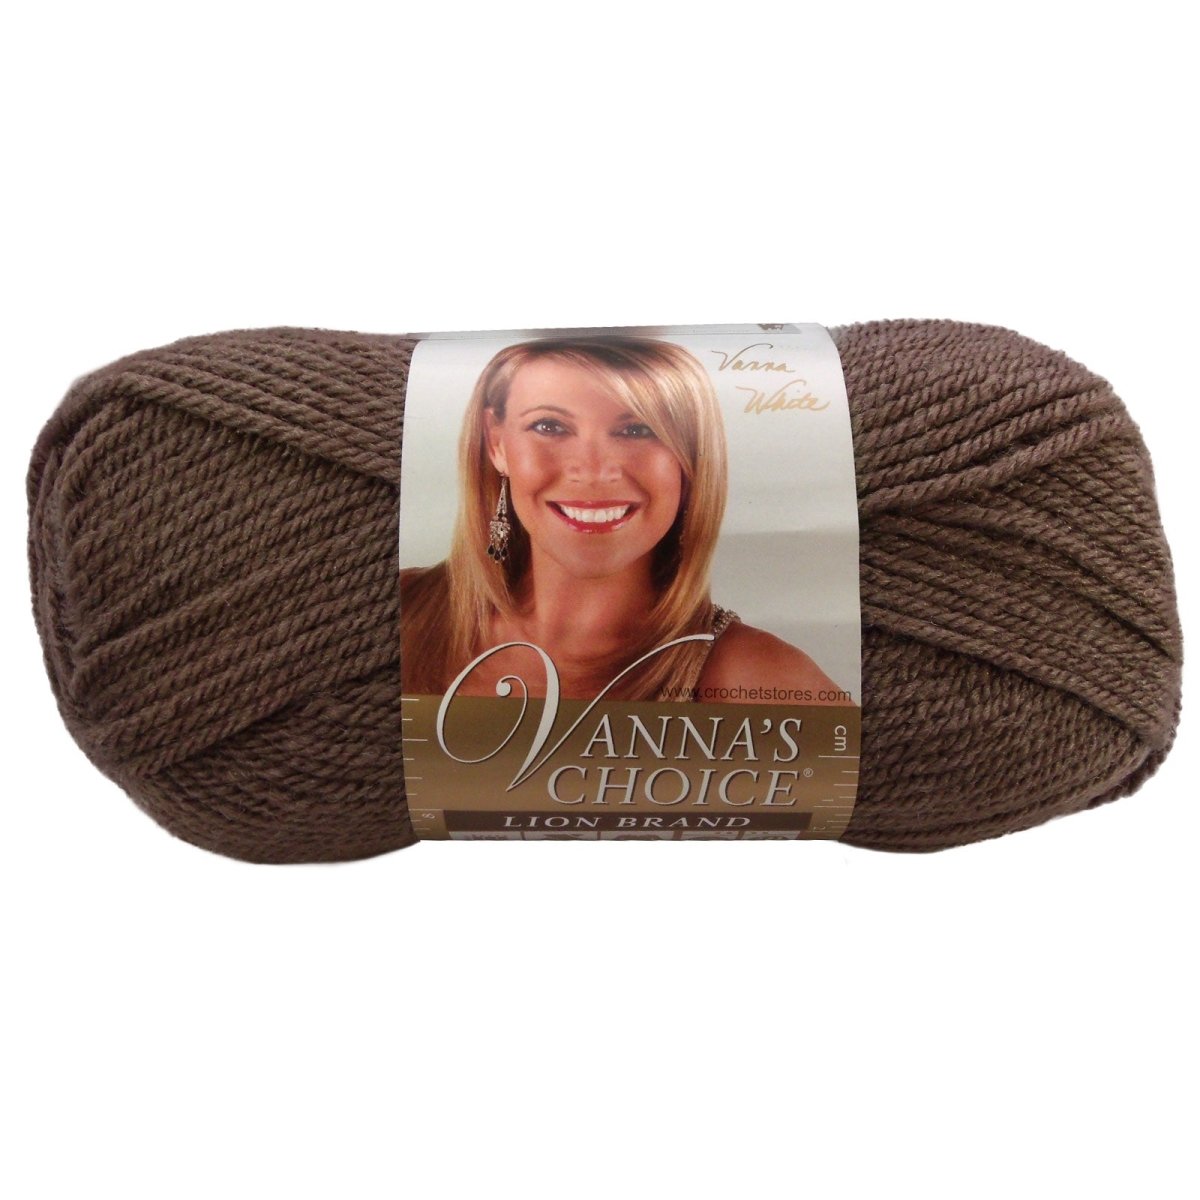 VANNAS CHOICE - Crochetstores860-125